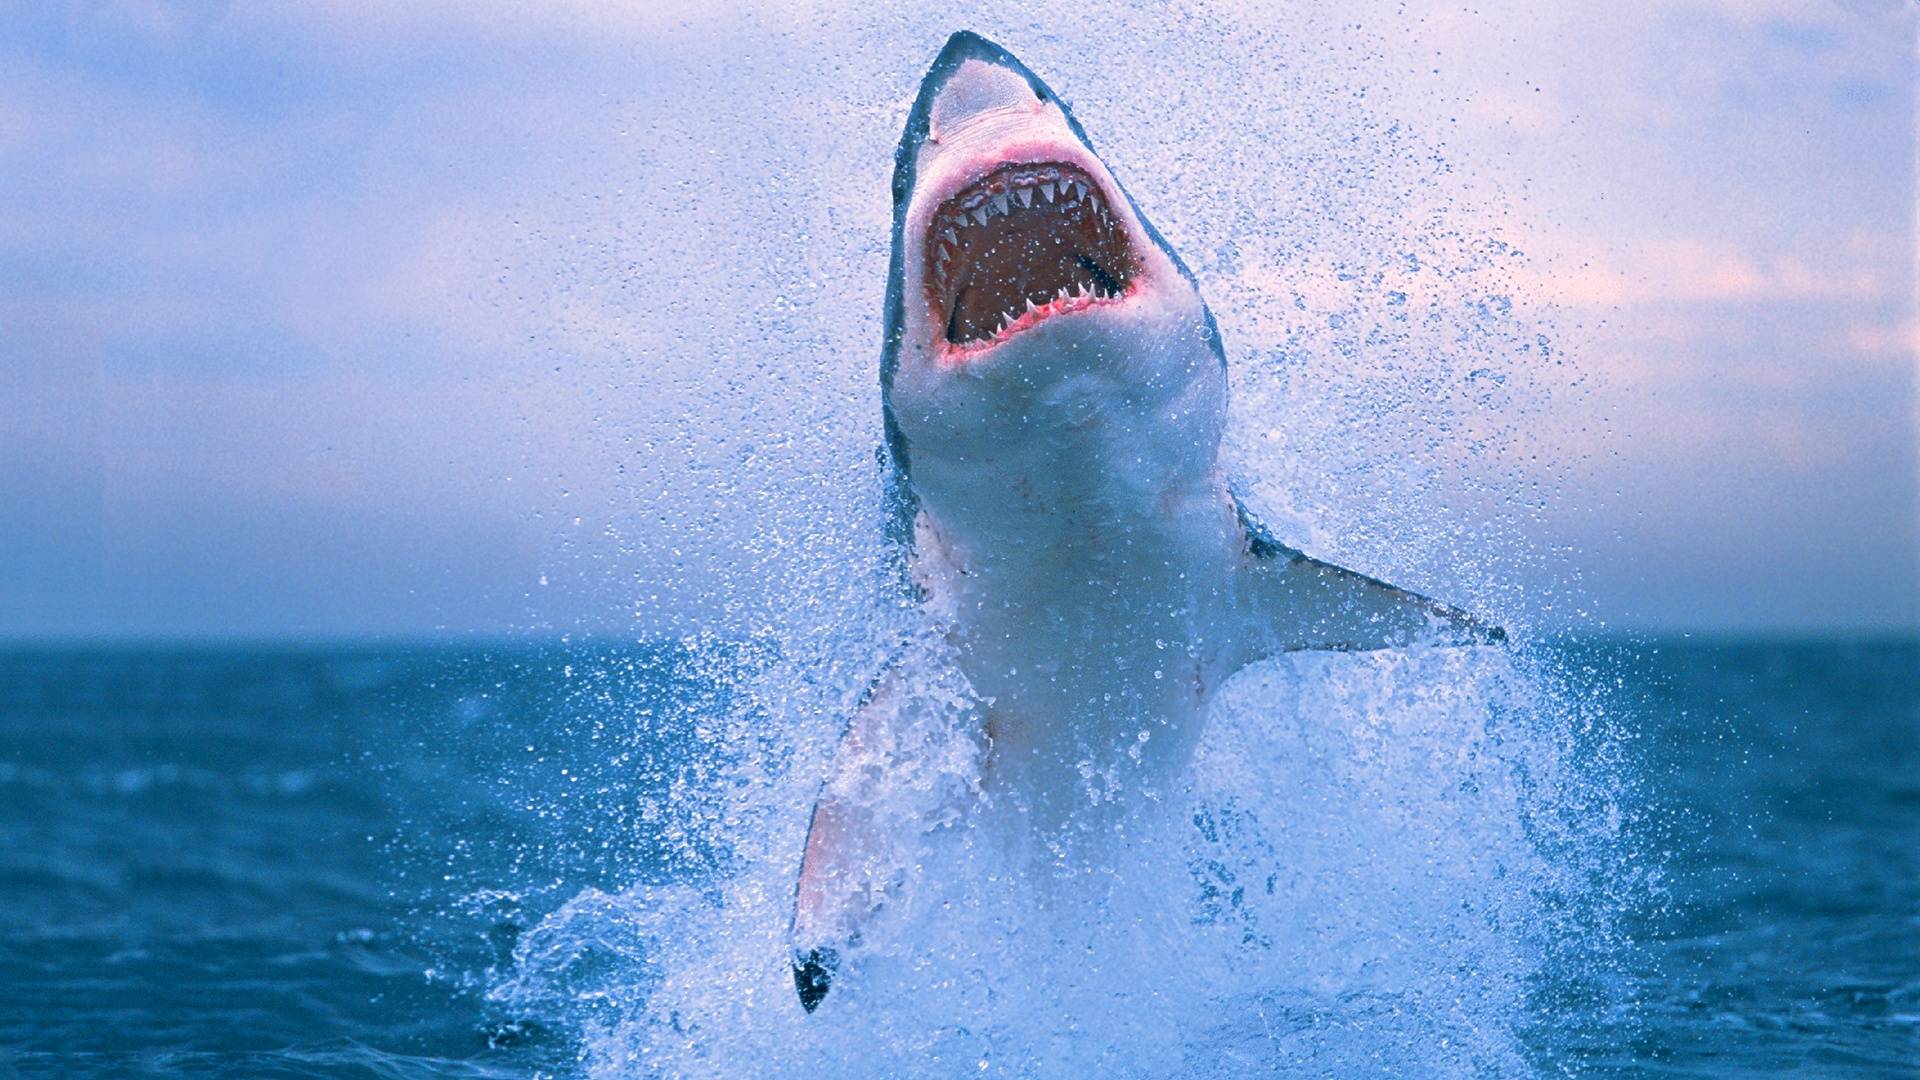 new shark photo desktop